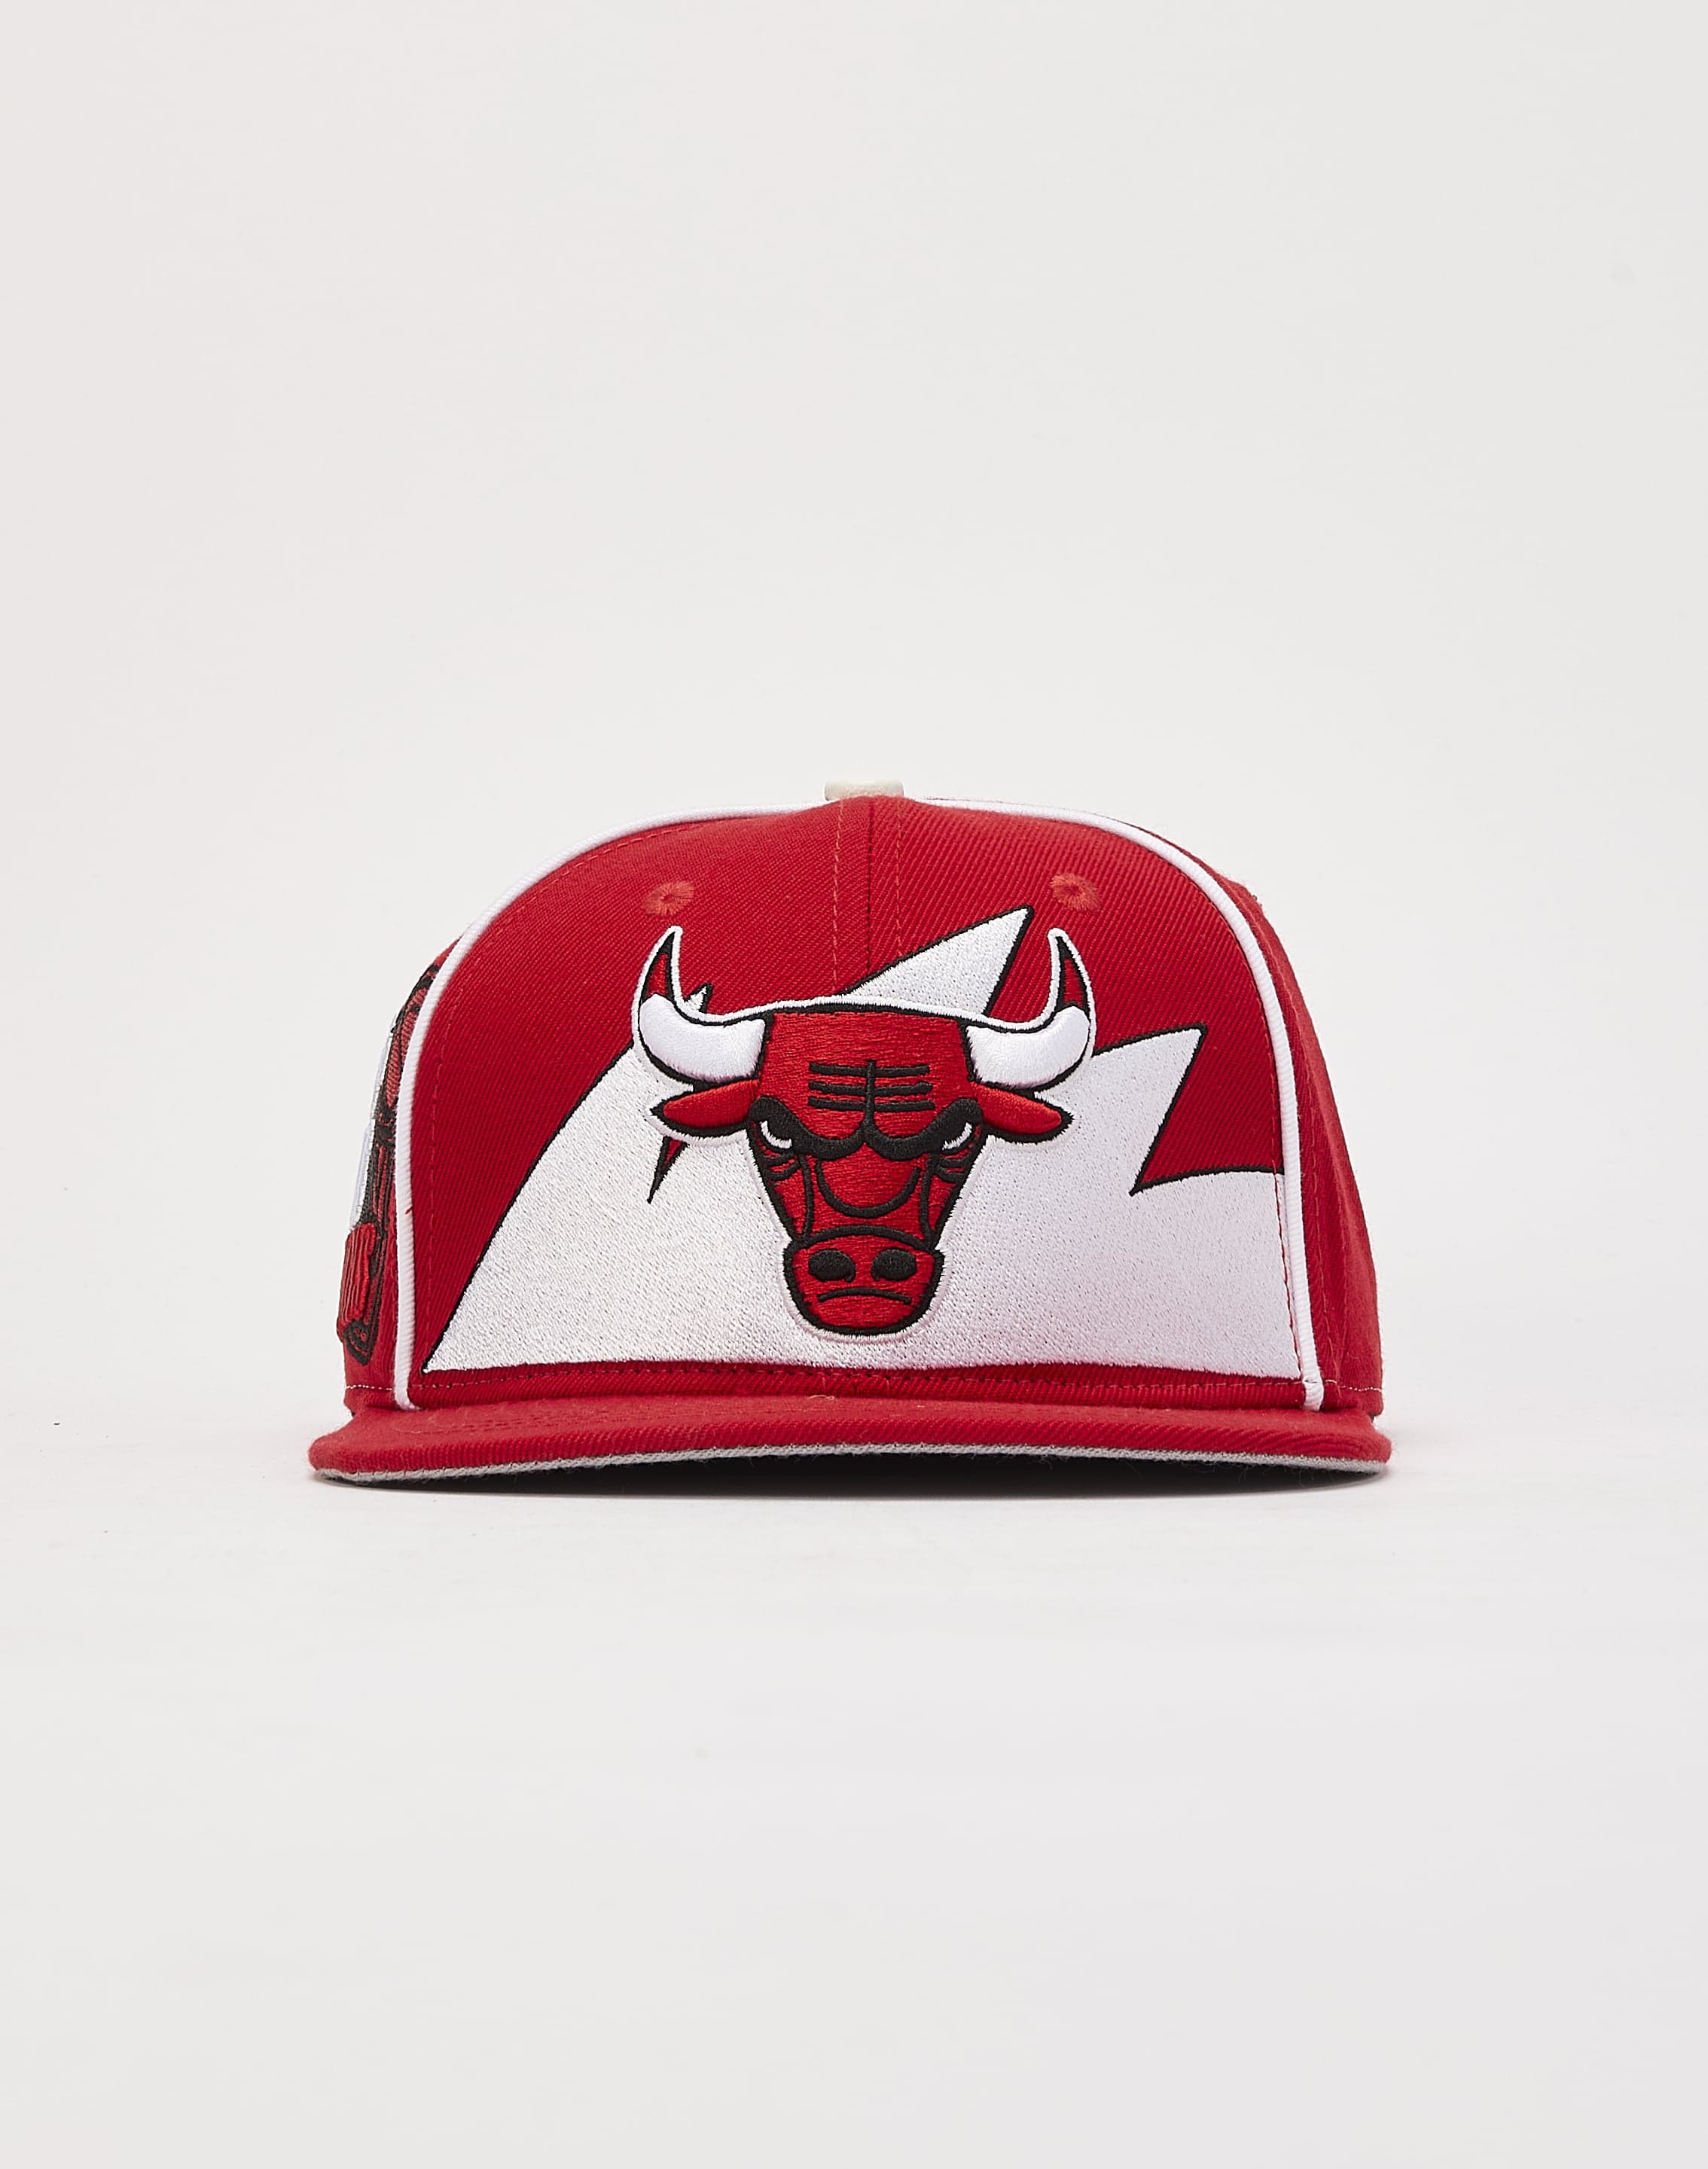 Men's Chicago Bulls Pro Standard Red Team Logo Snapback Hat